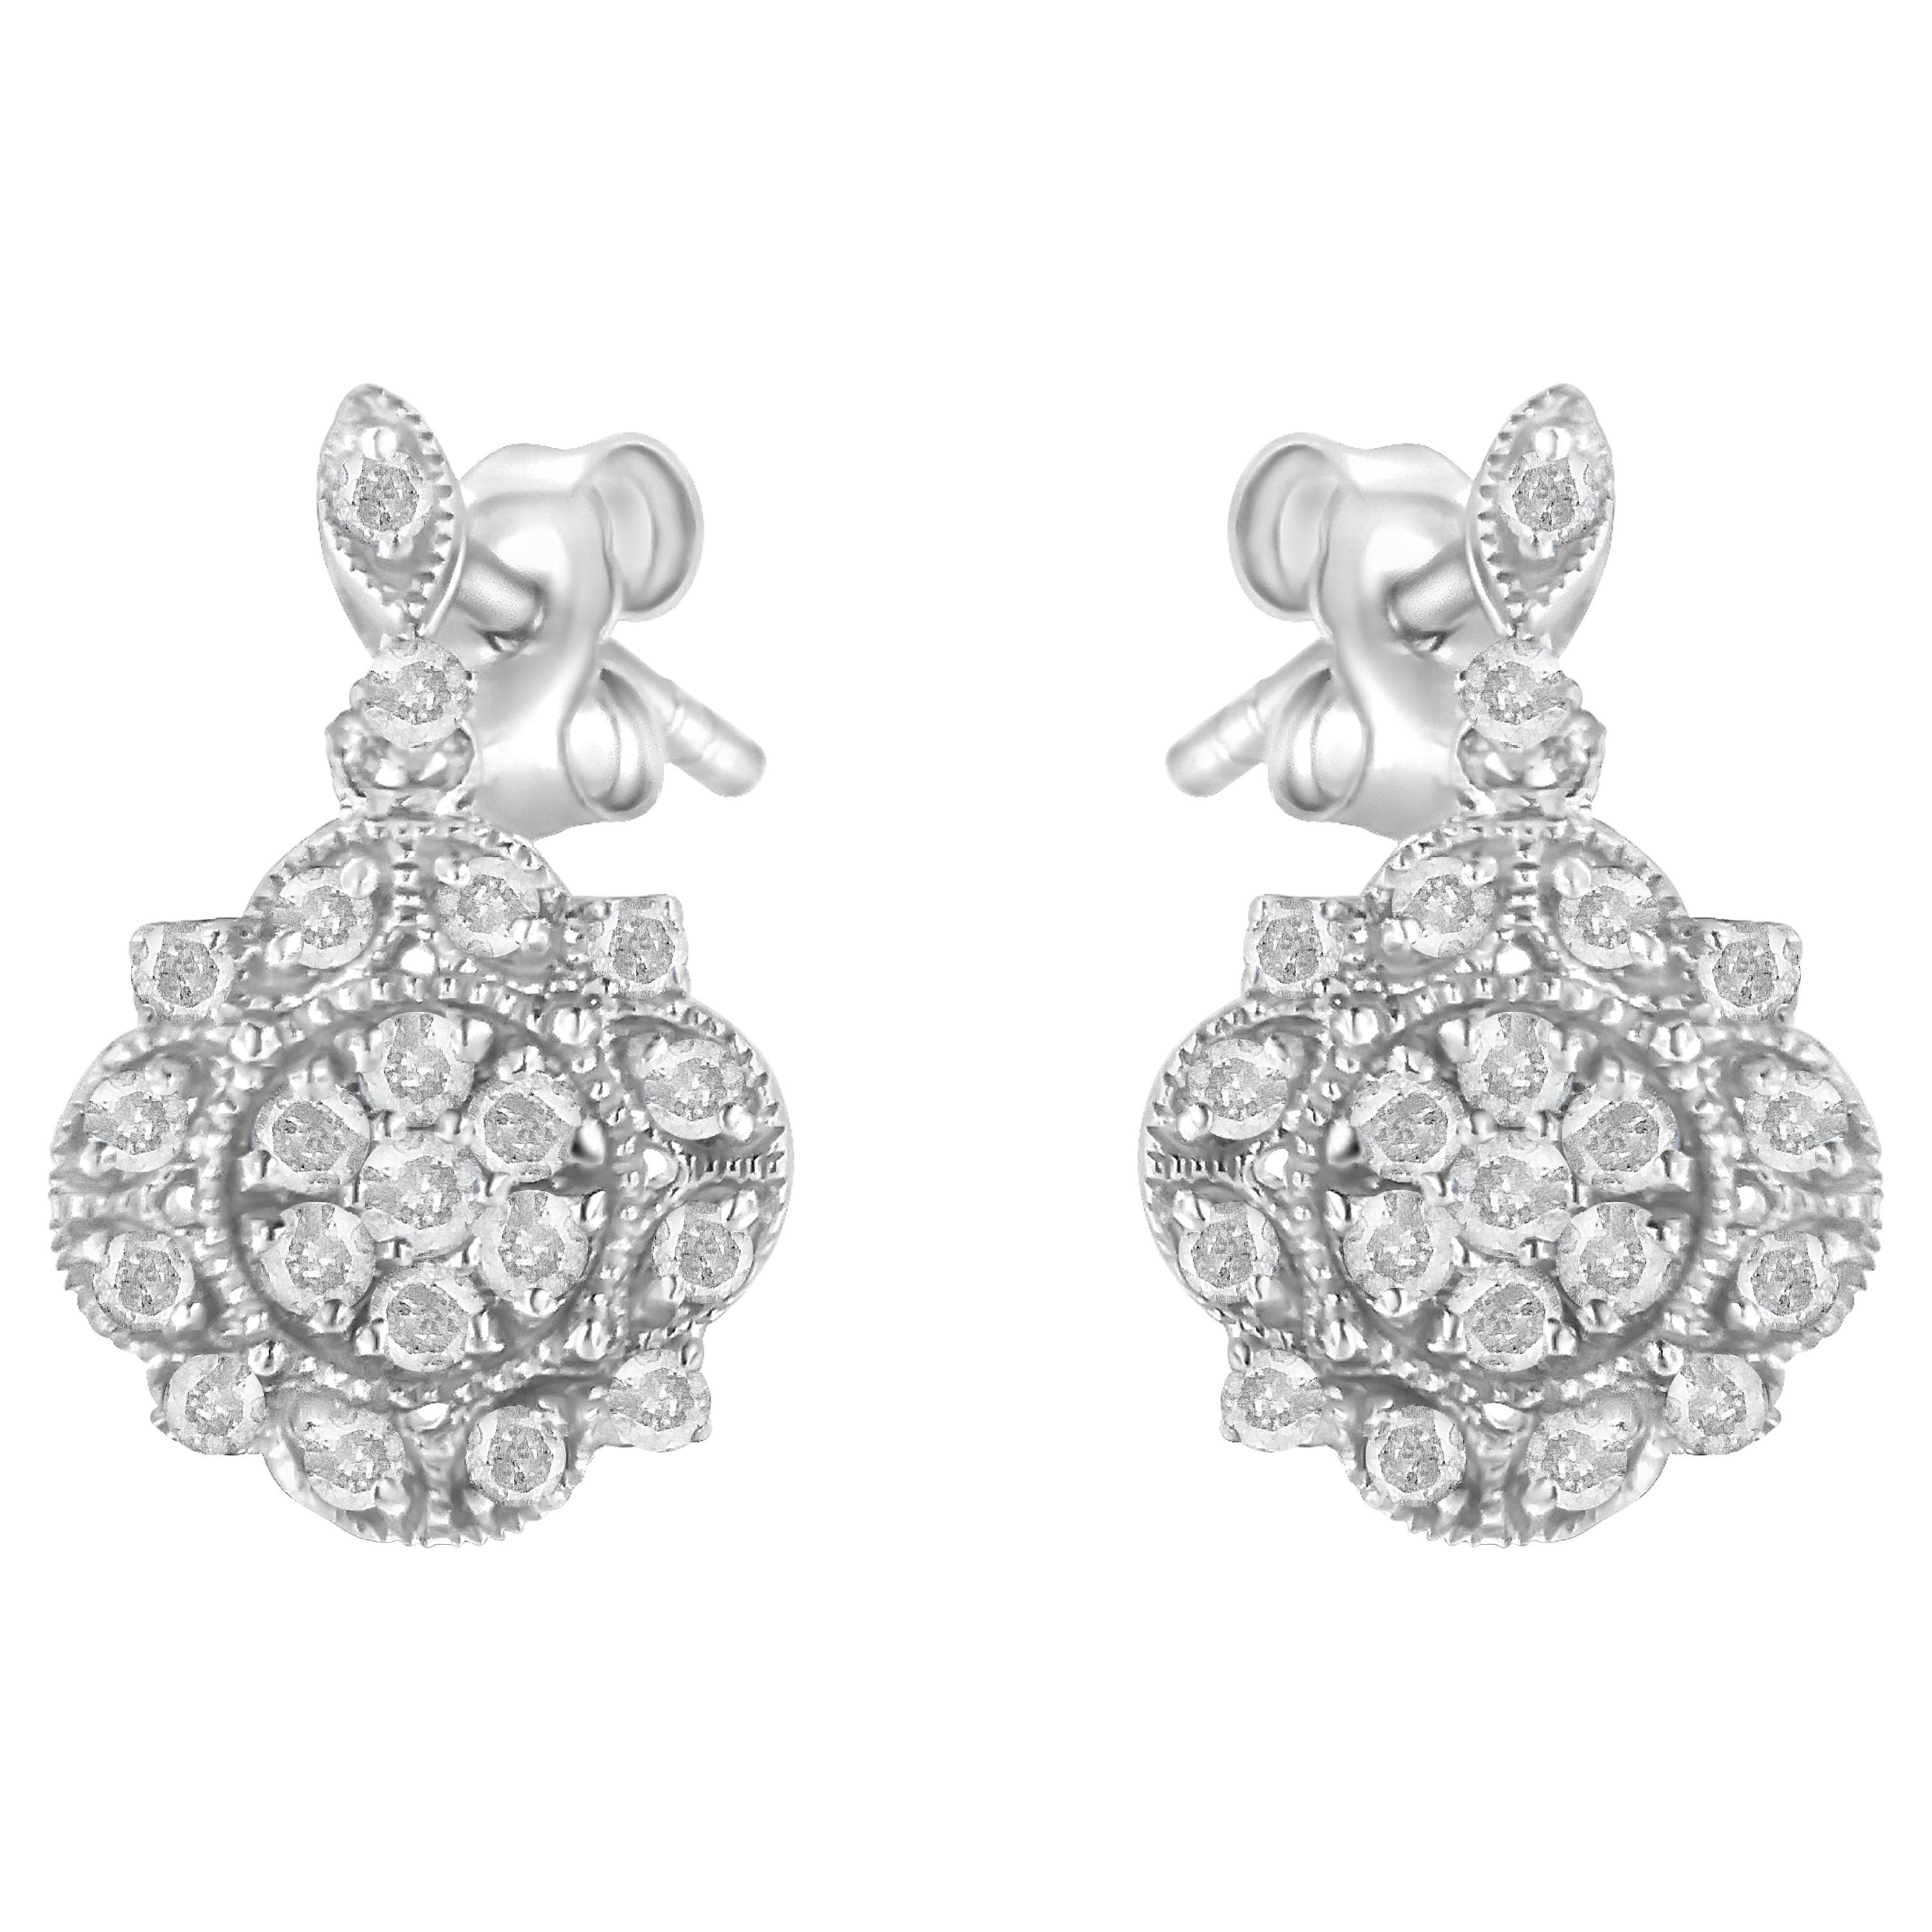 .925 Sterlingsilber 1/2 Karat Diamant-Ohrring mit Miligrain-Ohrring